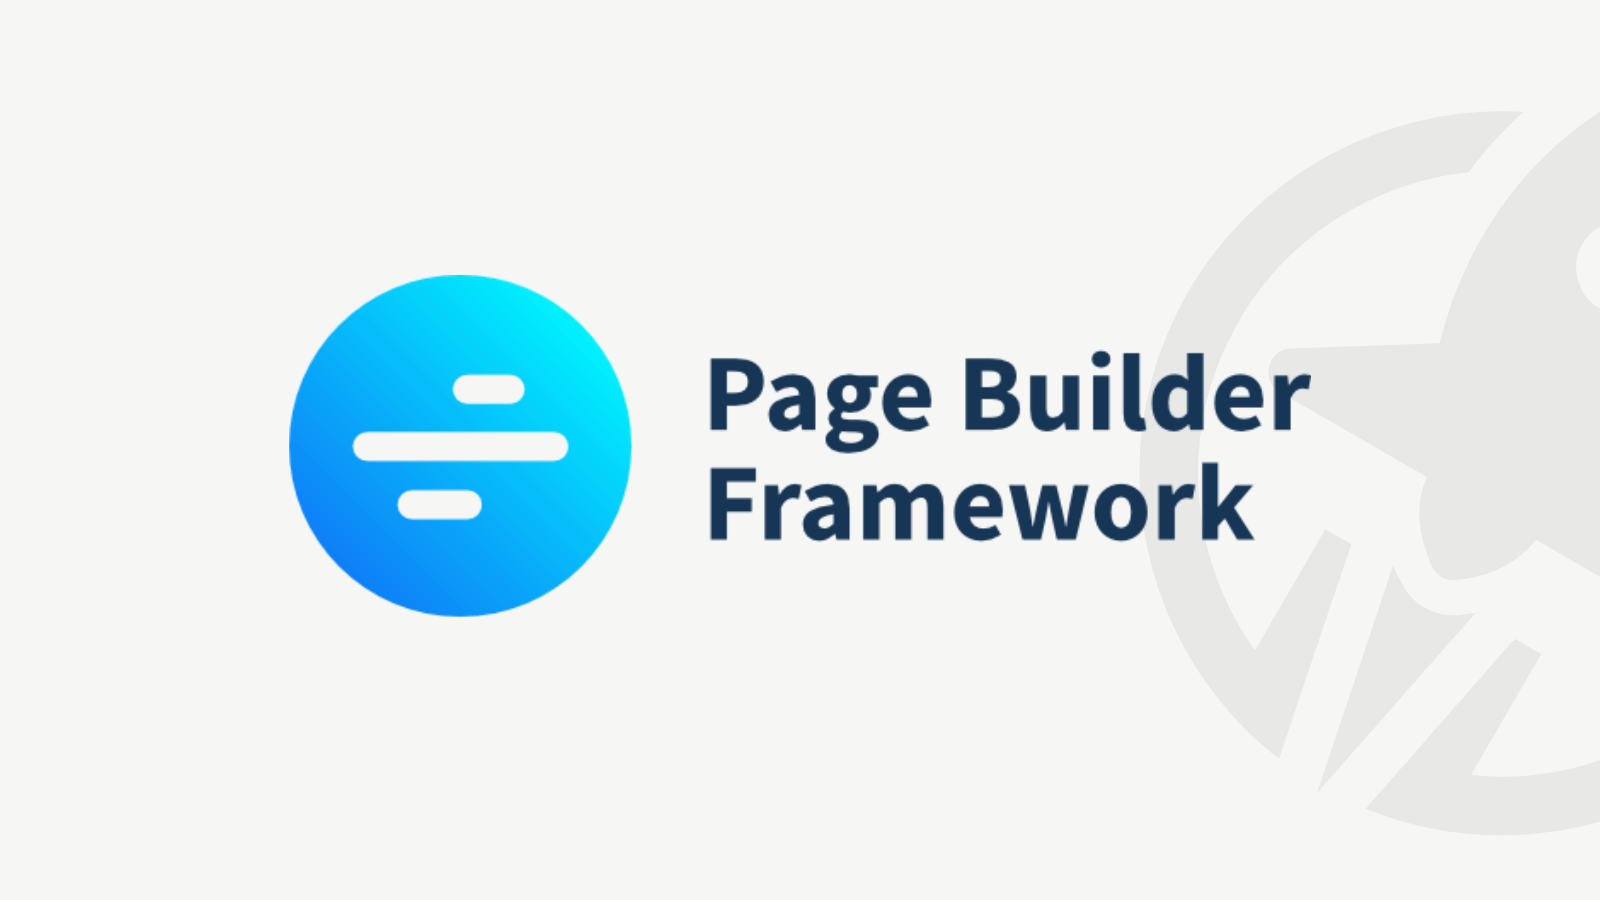 Page Builder Framework Theme